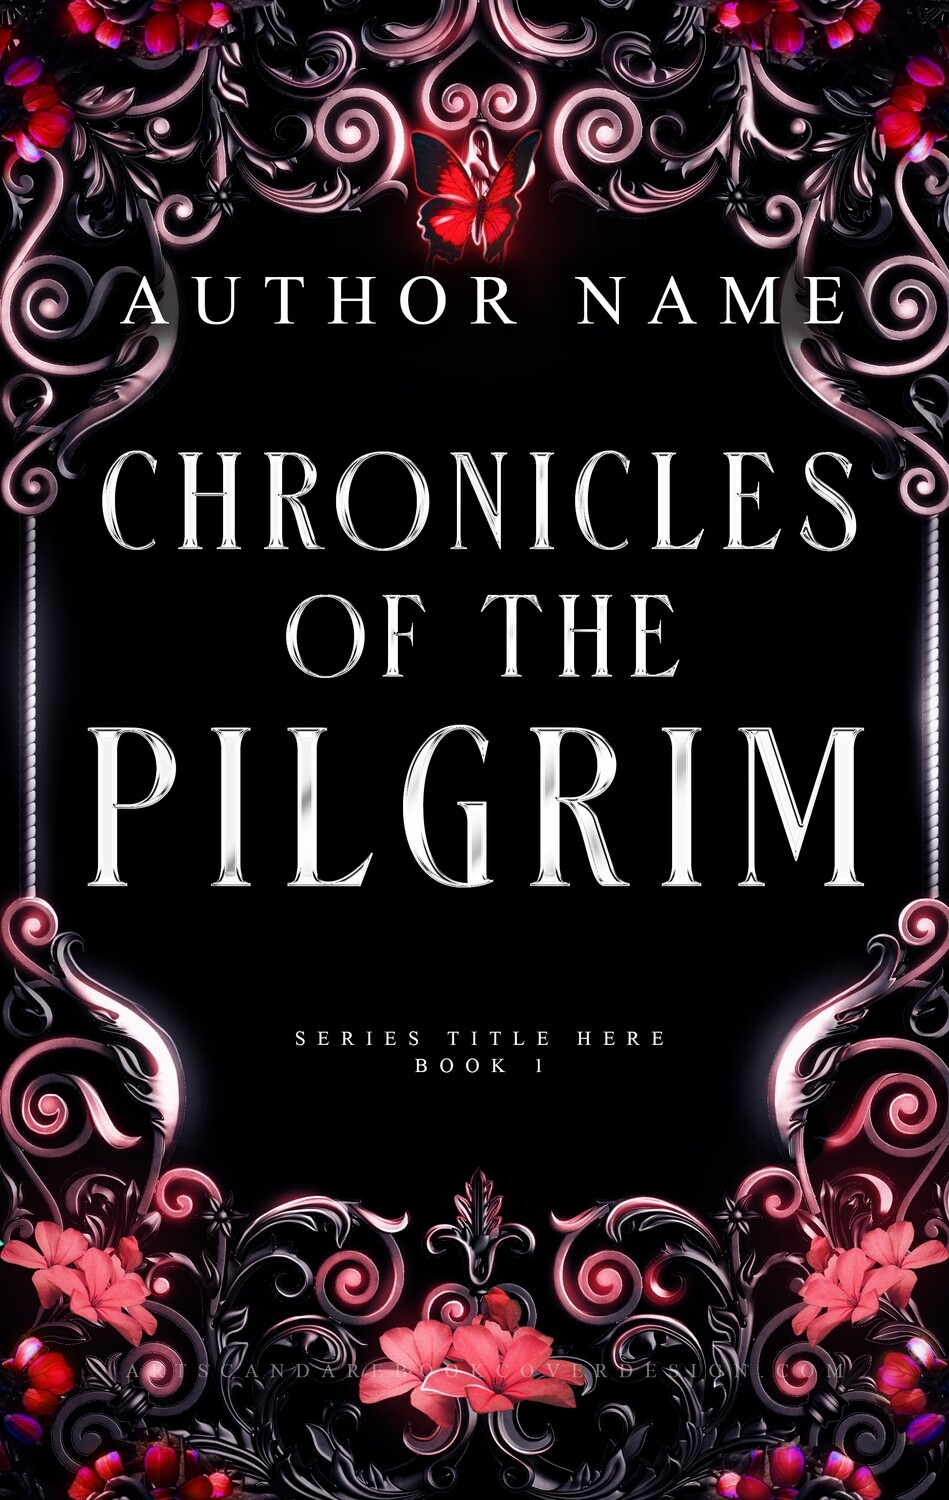 CHRONICLES OF THE PILGRIM